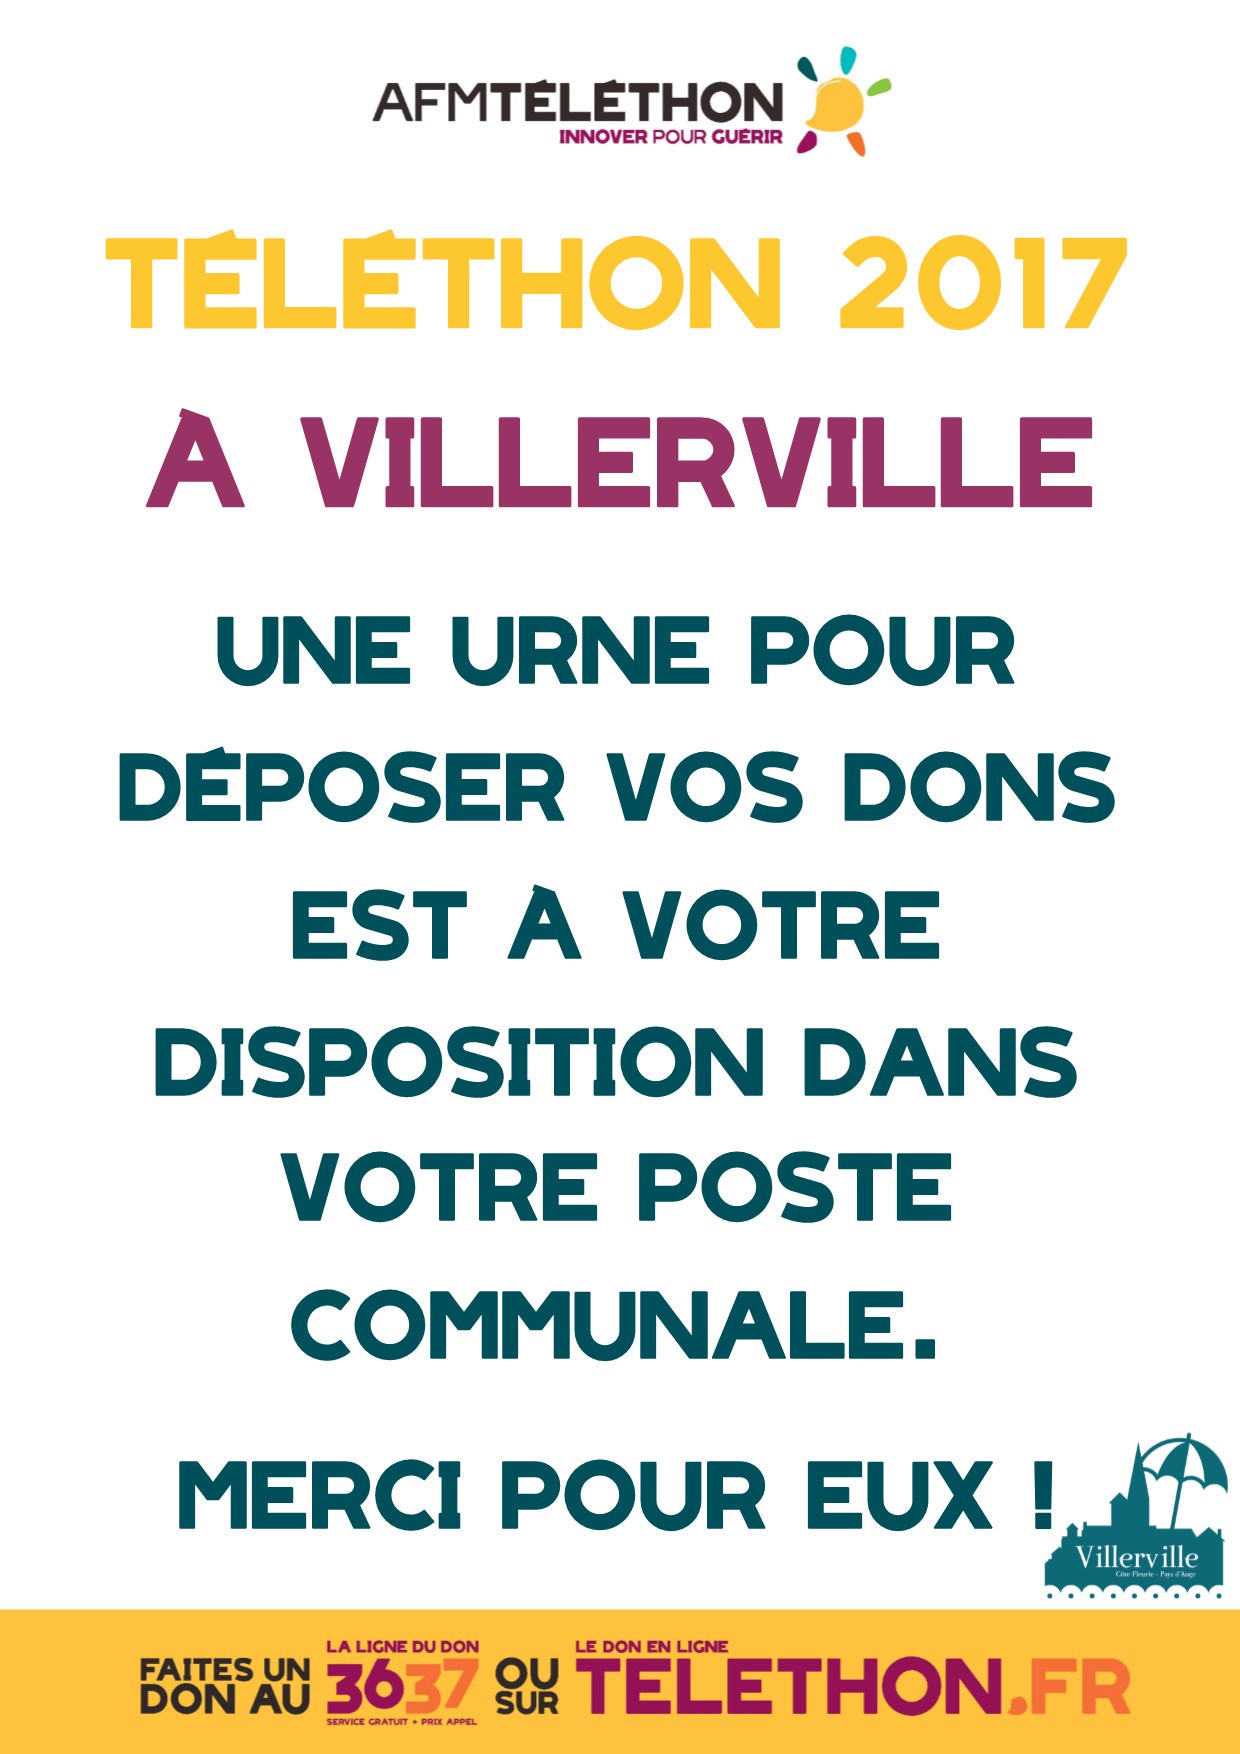 Affiche poste telethon2017pendant